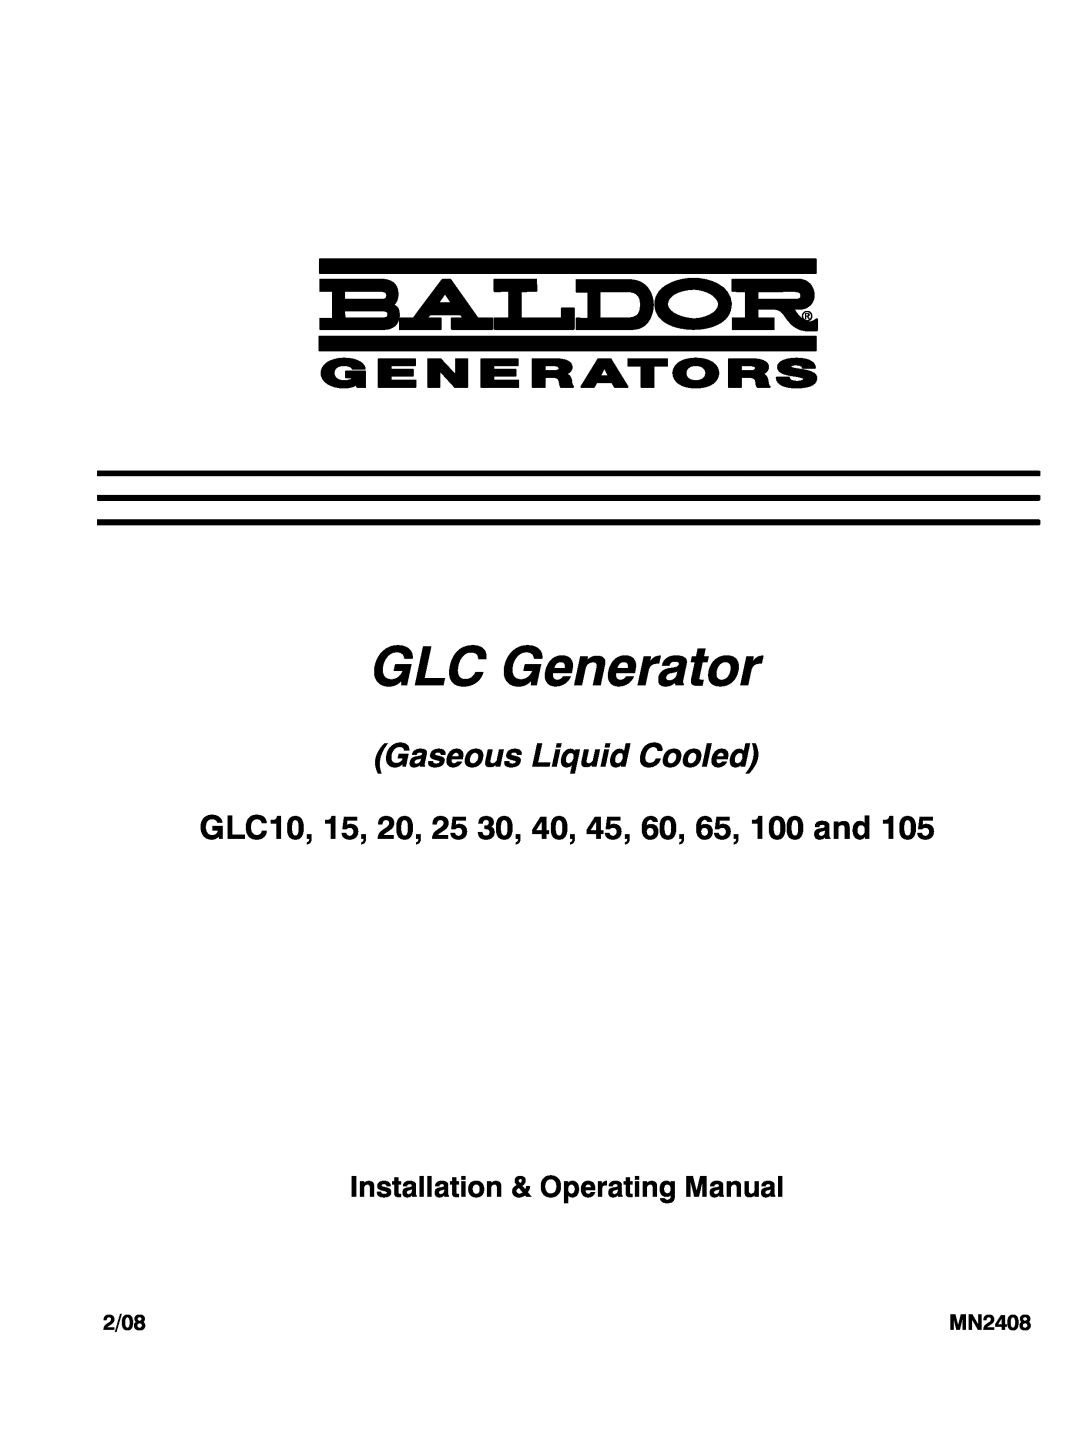 Baldor GLC60 manual GLC Generator, Gaseous Liquid Cooled, GLC10, 15, 20, 25 30, 40, 45, 60, 65, 100 and, 2/08, MN2408 